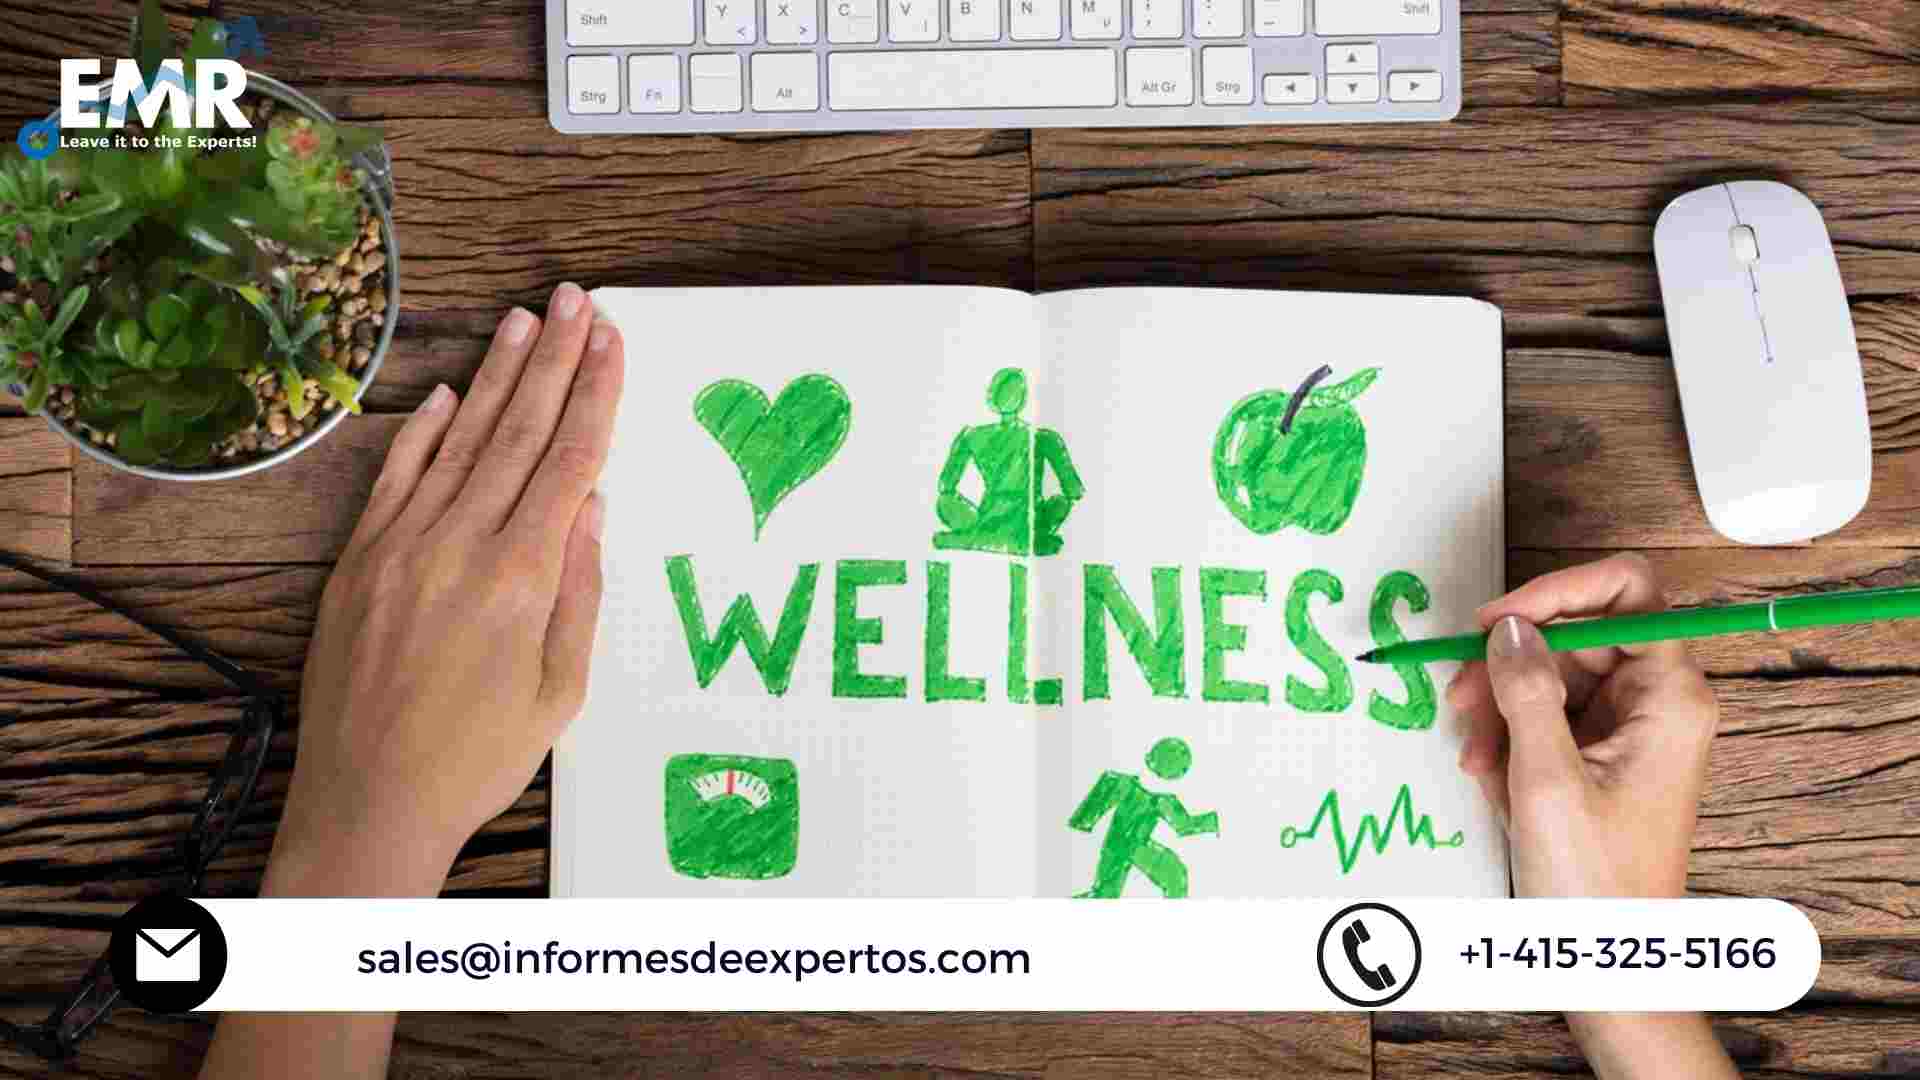 Corporate Wellness Market